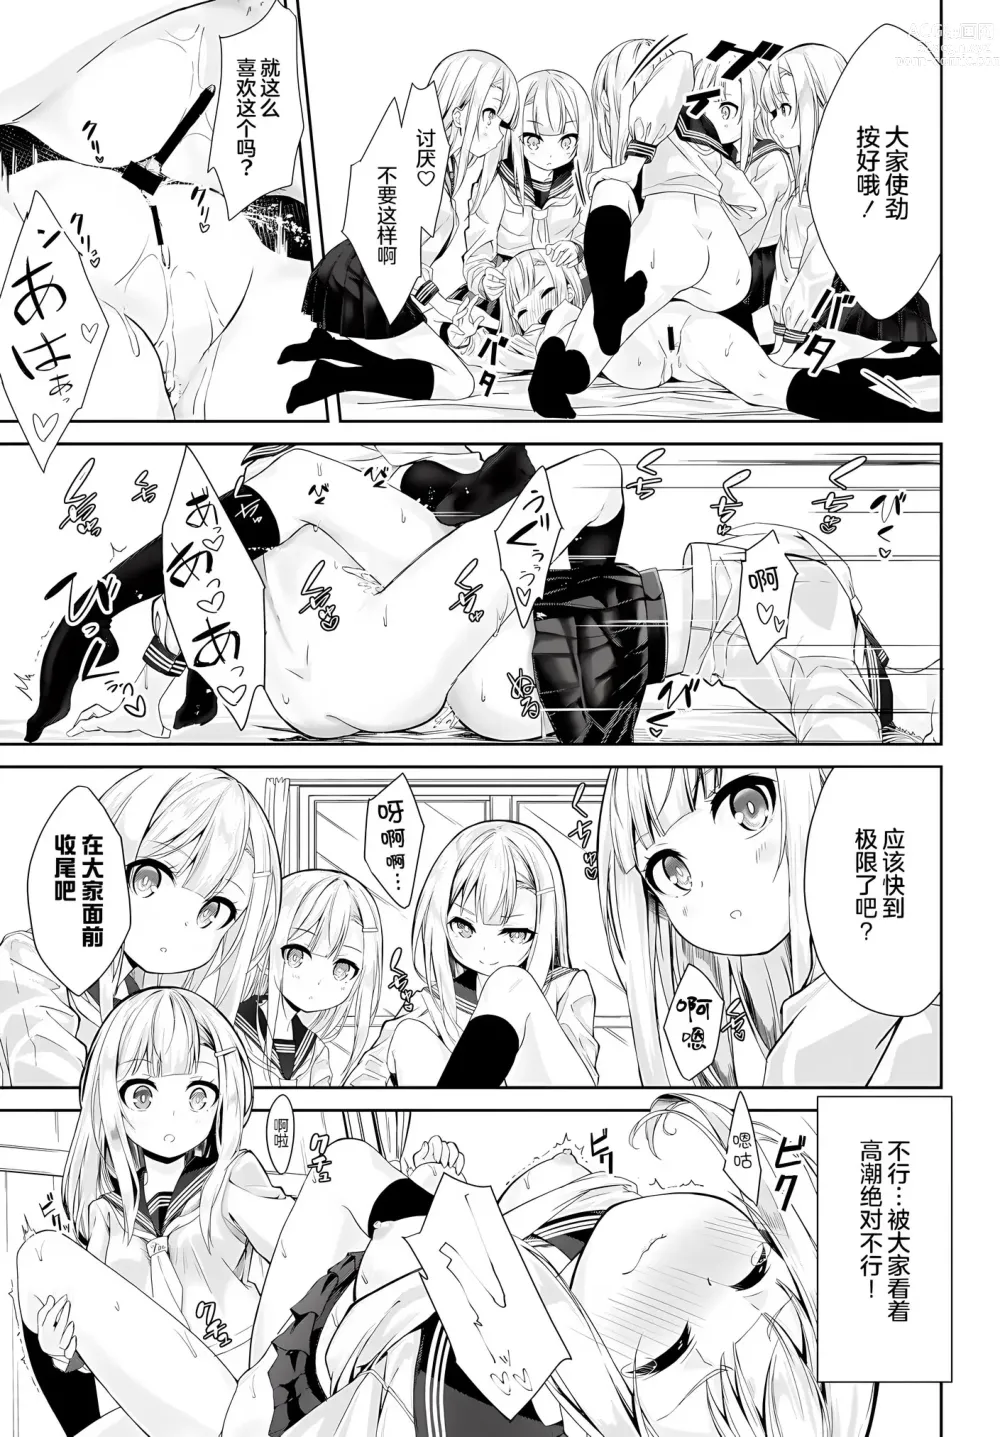 Page 57 of manga Skirt no Naka wa Fantastic!